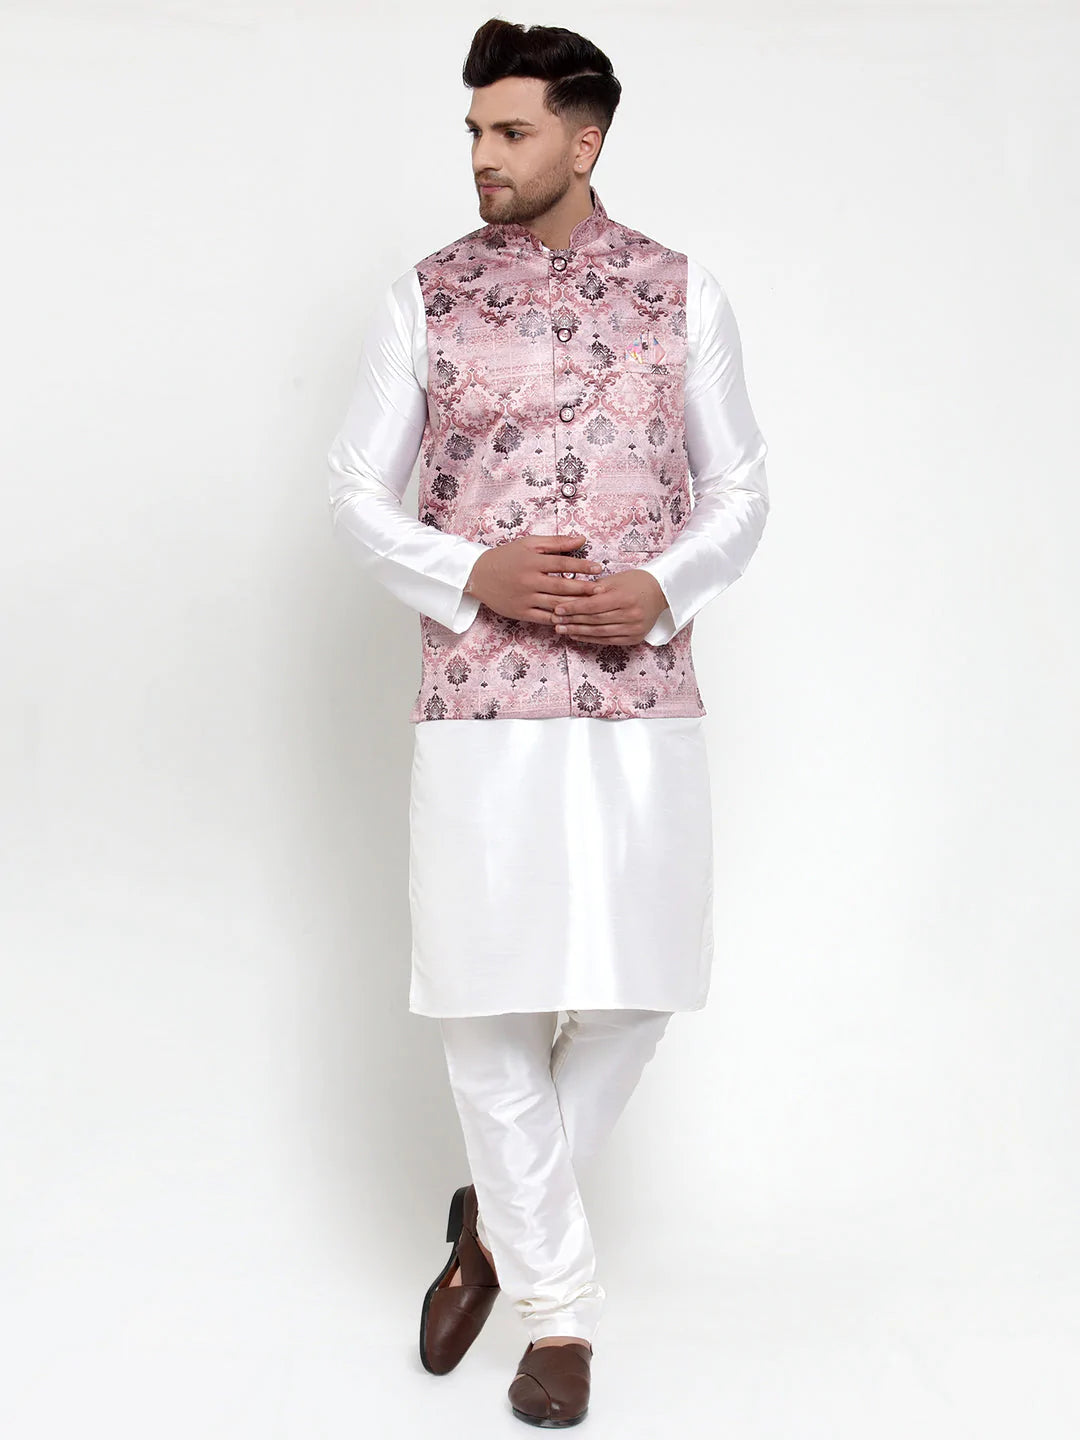 Jompers Men's Solid Dupion Kurta Pajama with Printed Nehru Jacket ( JOKPWC OW-D 4014Pink )